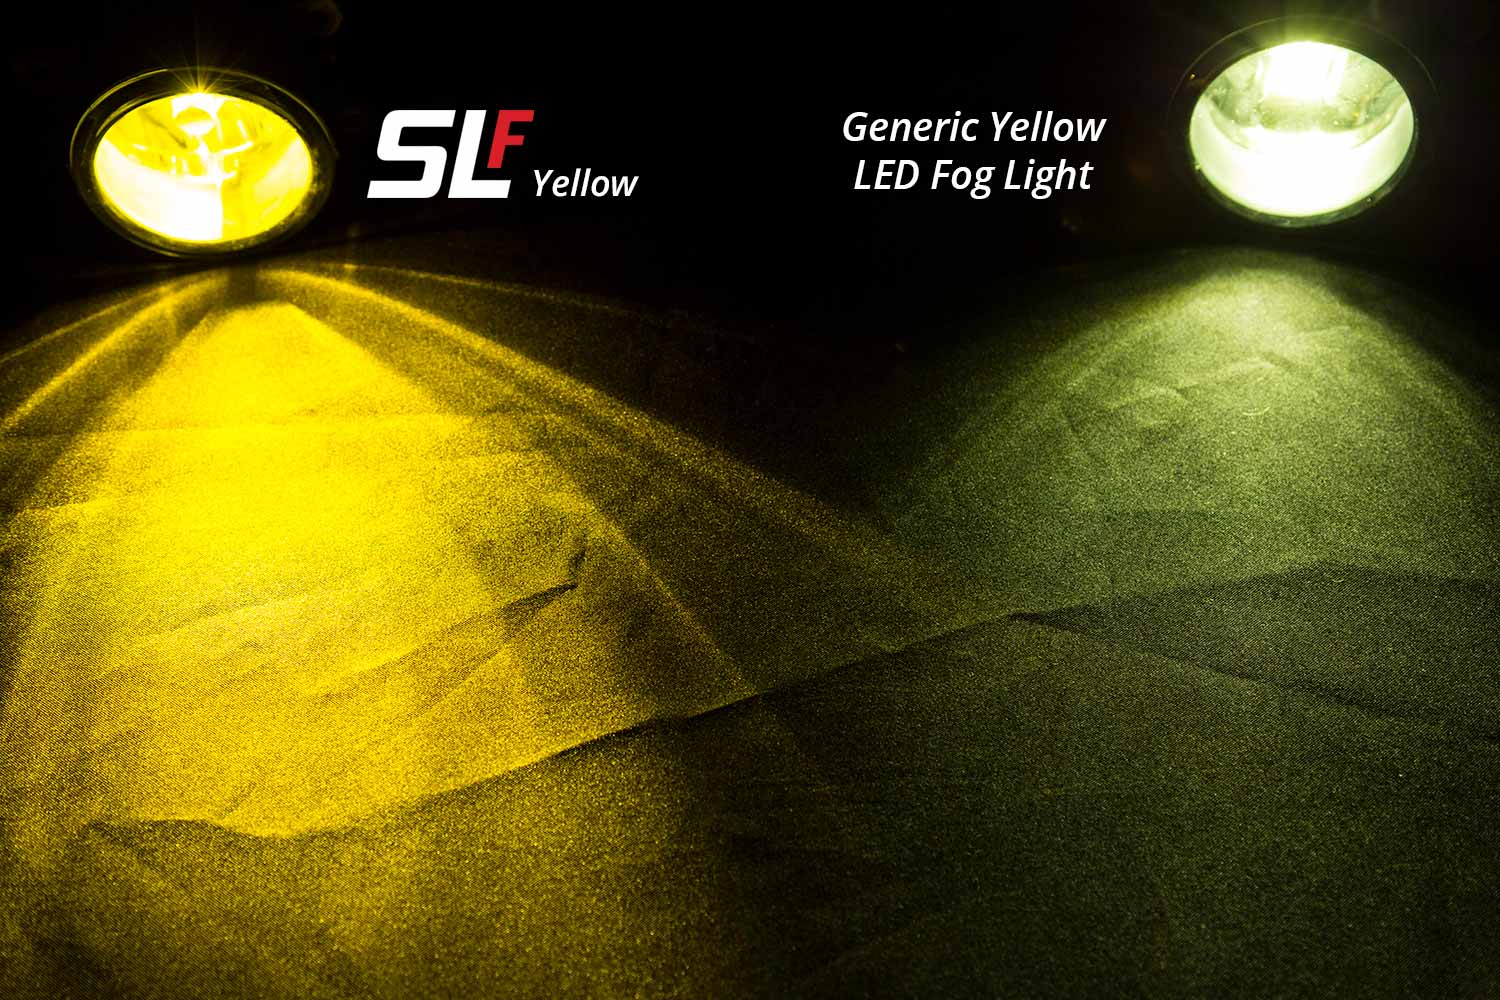 9005 SLF LED Yellow Pair Diode Dynamics